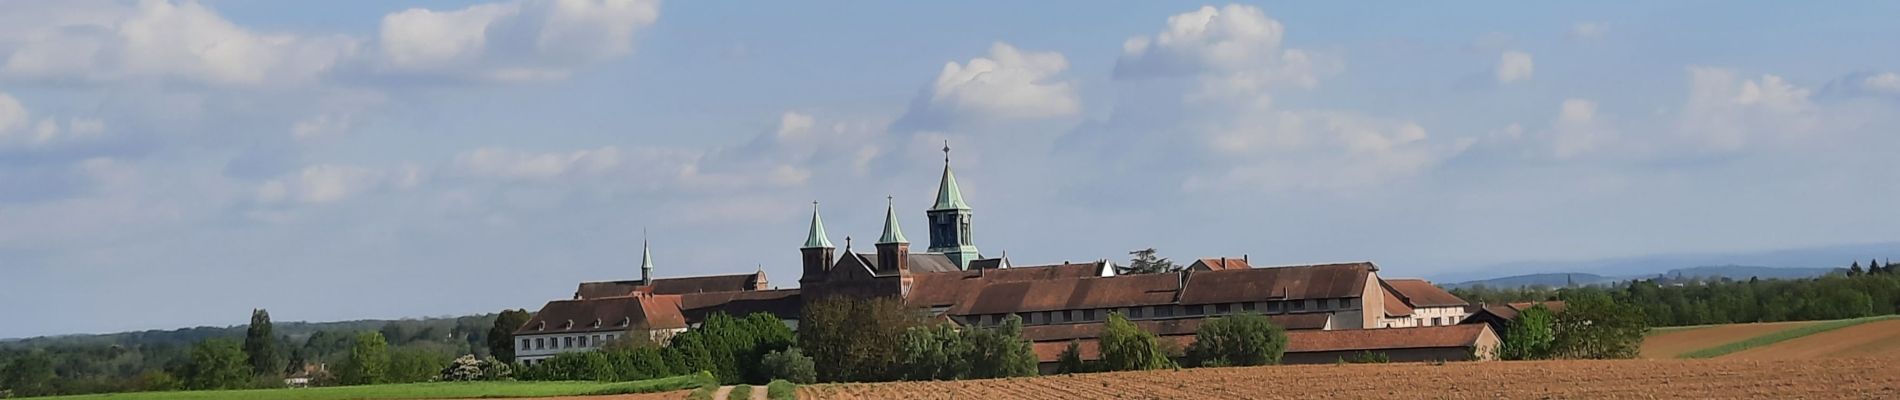 Tocht Stappen Reiningue - abbaye de l'Oelenberg   Reiningue - Photo